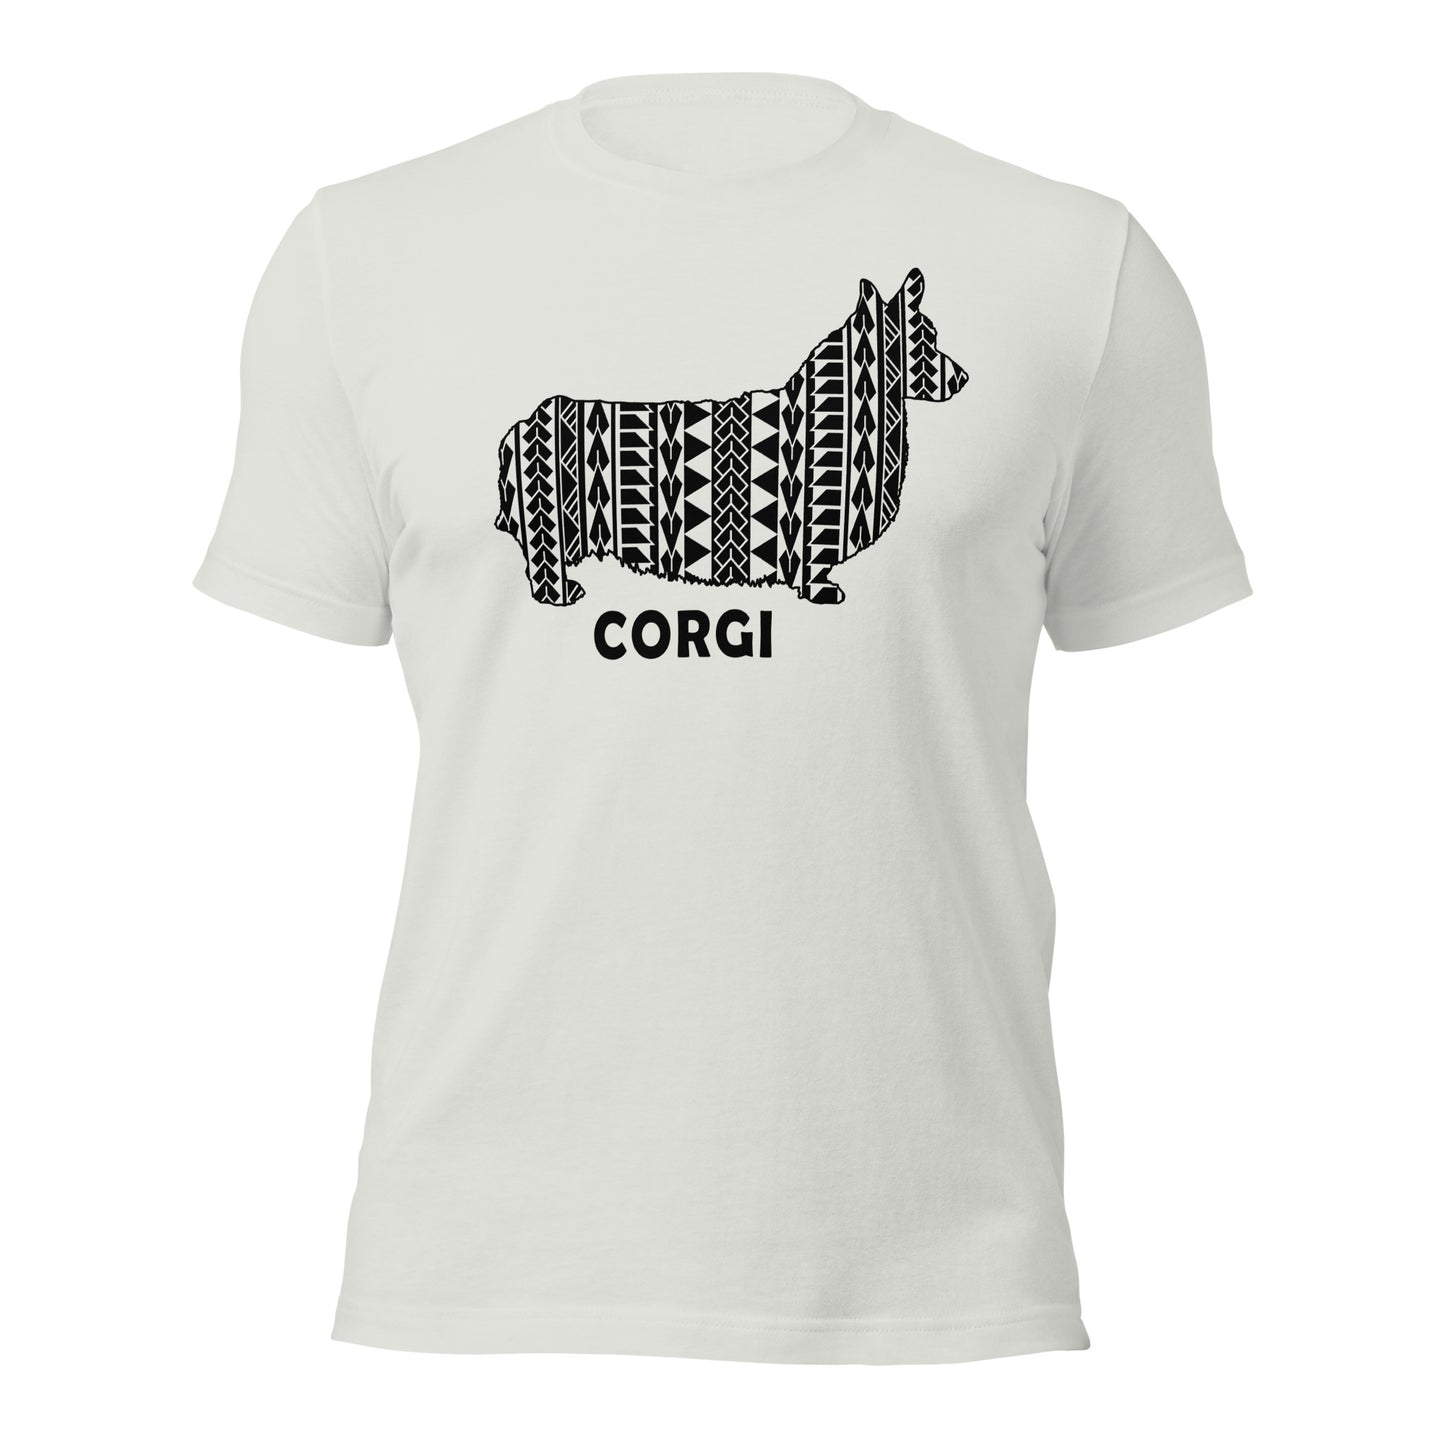 Corgi Polynesian t-shirt silver by Dog Artistry.